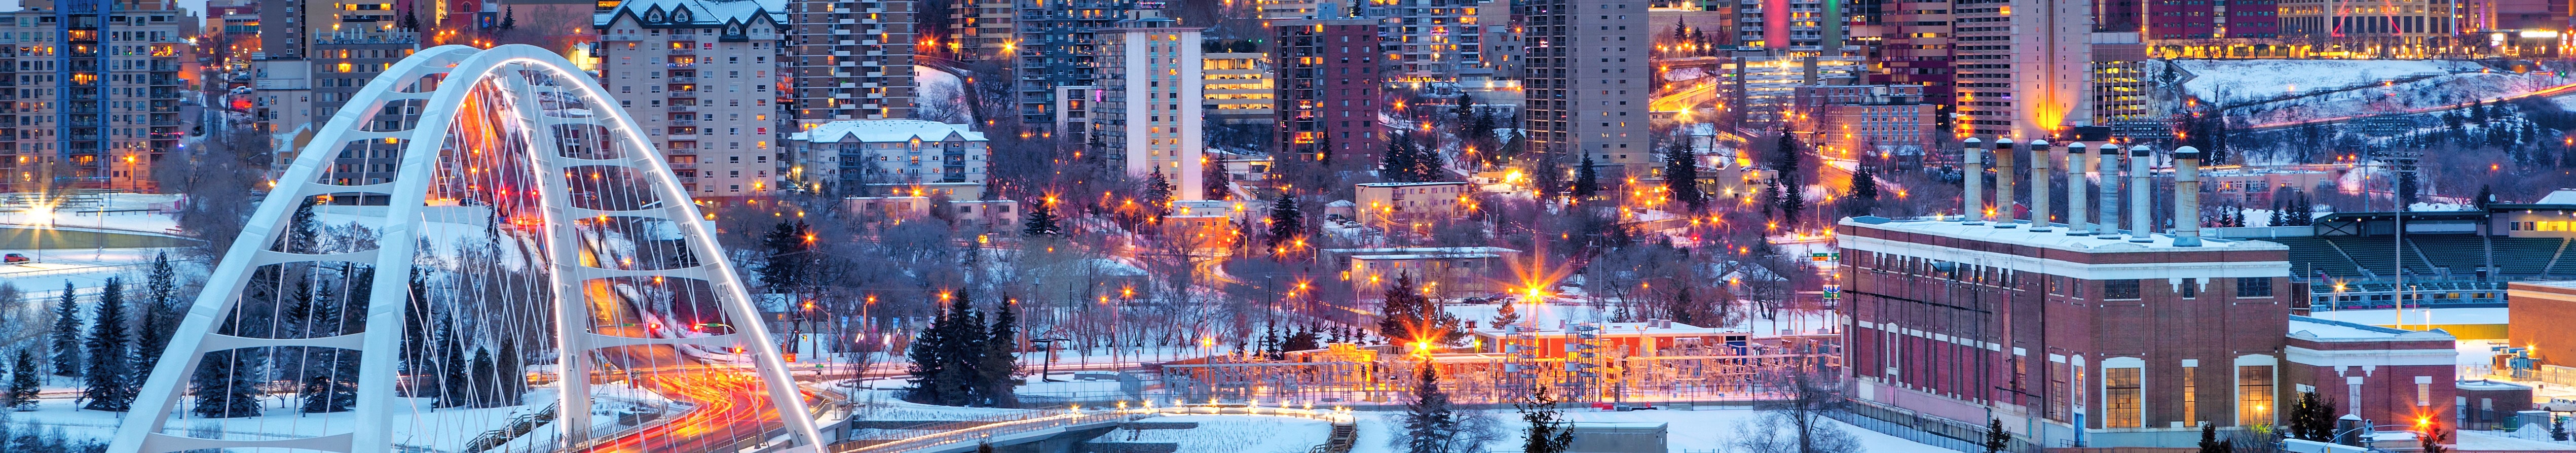 Edmonton in winter